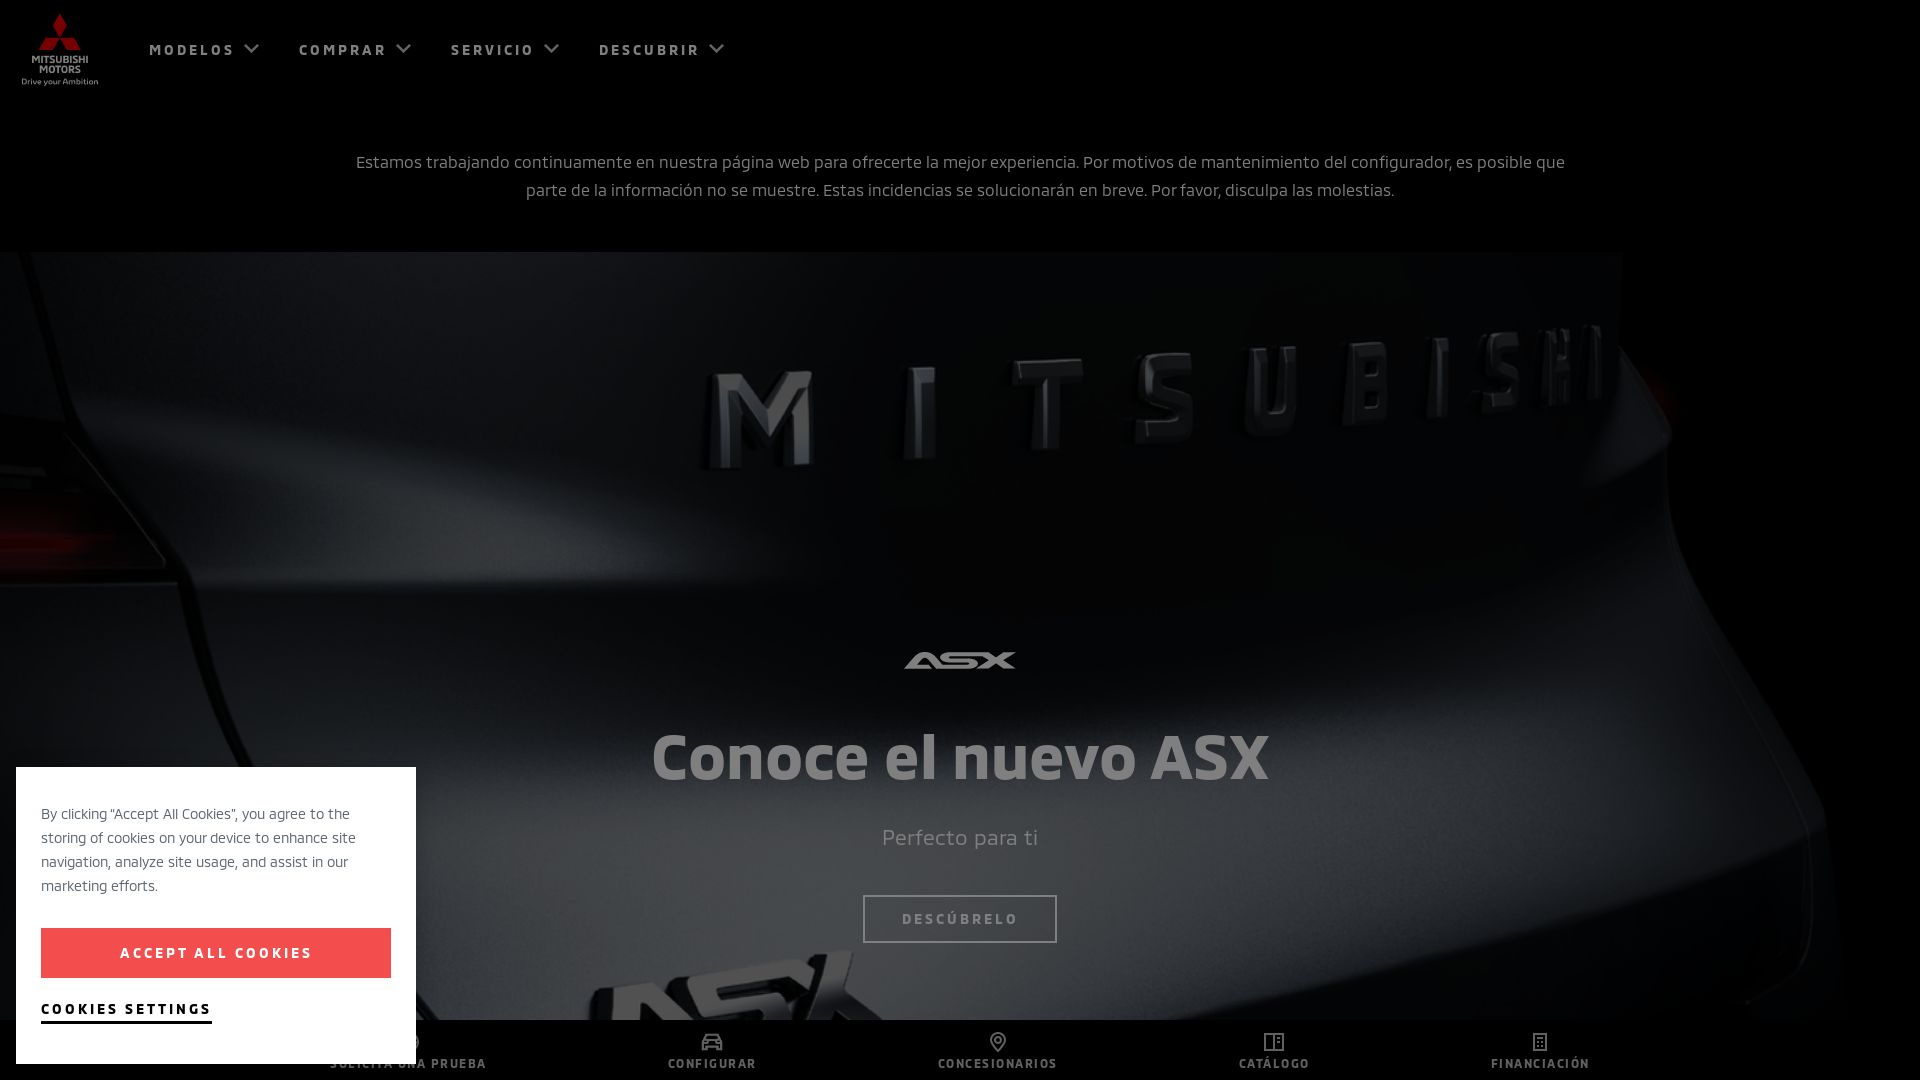 Website status mitsubishi-motors.es is   ONLINE